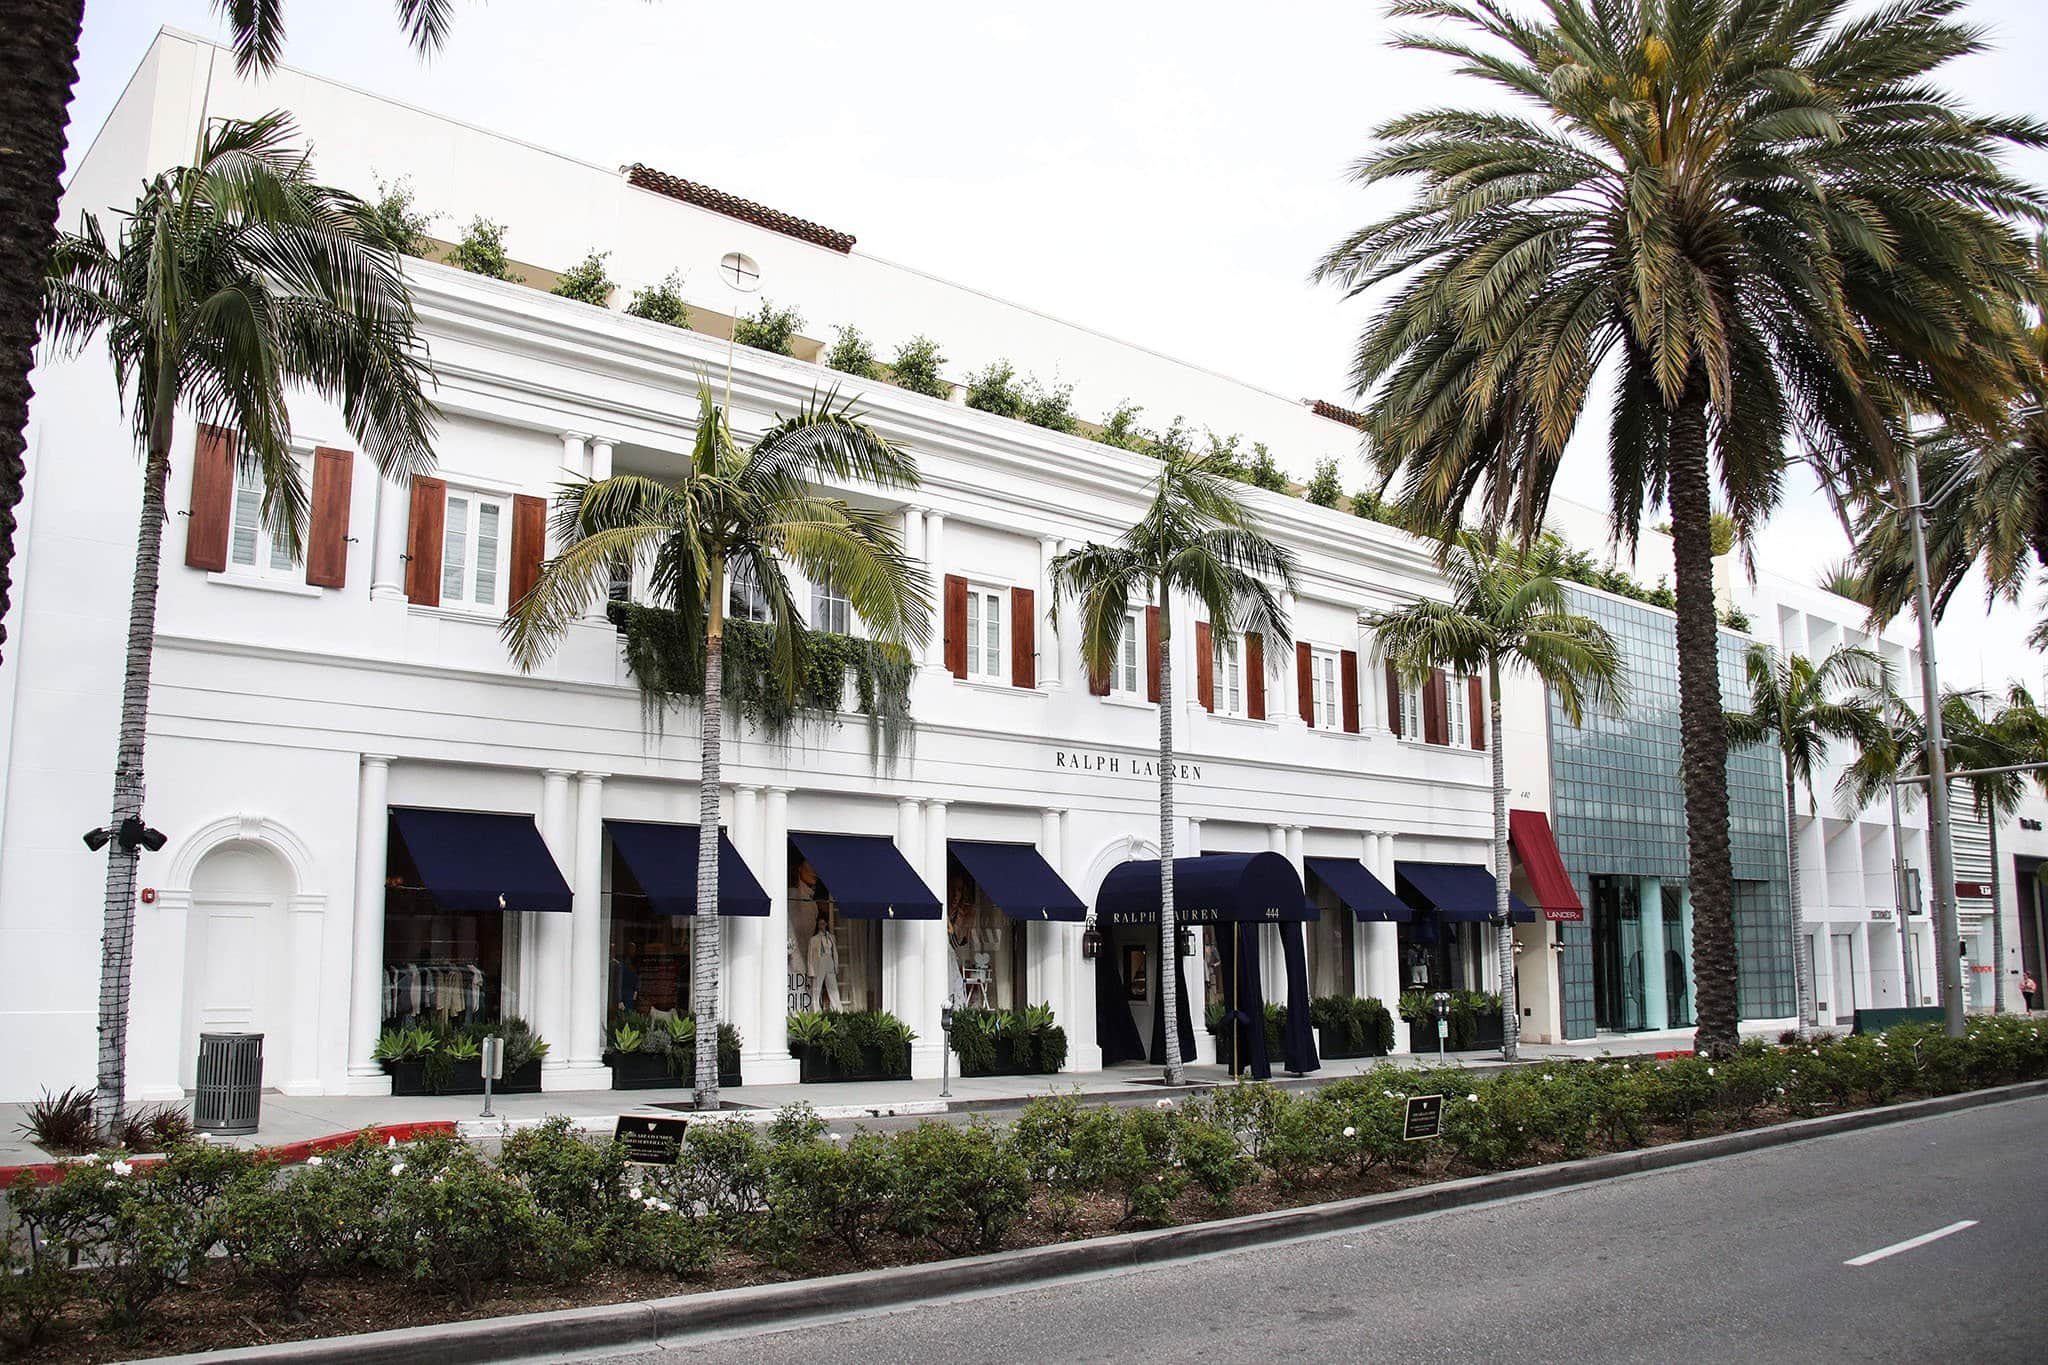 Ralph Lauren Beverly Hills*